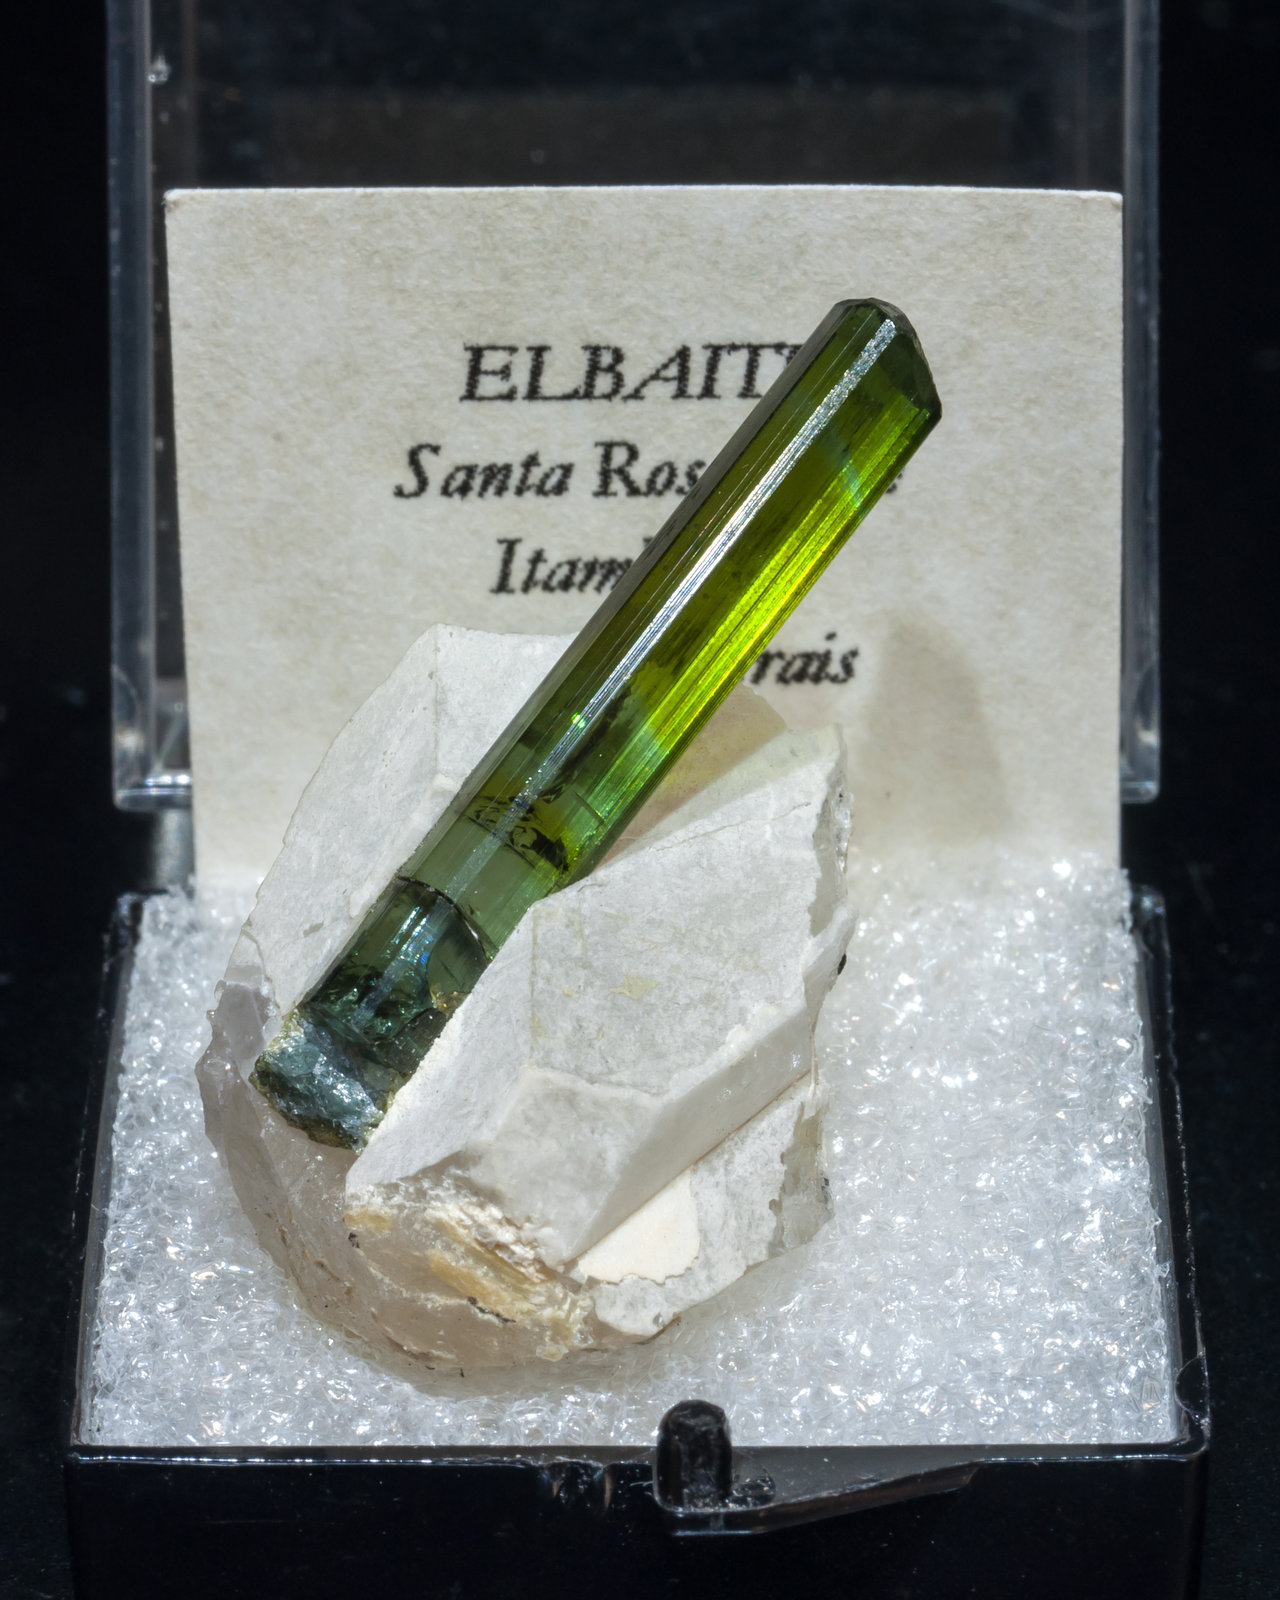 specimens/s_imagesAK5/Elbaite-TH46AK5f1.jpg